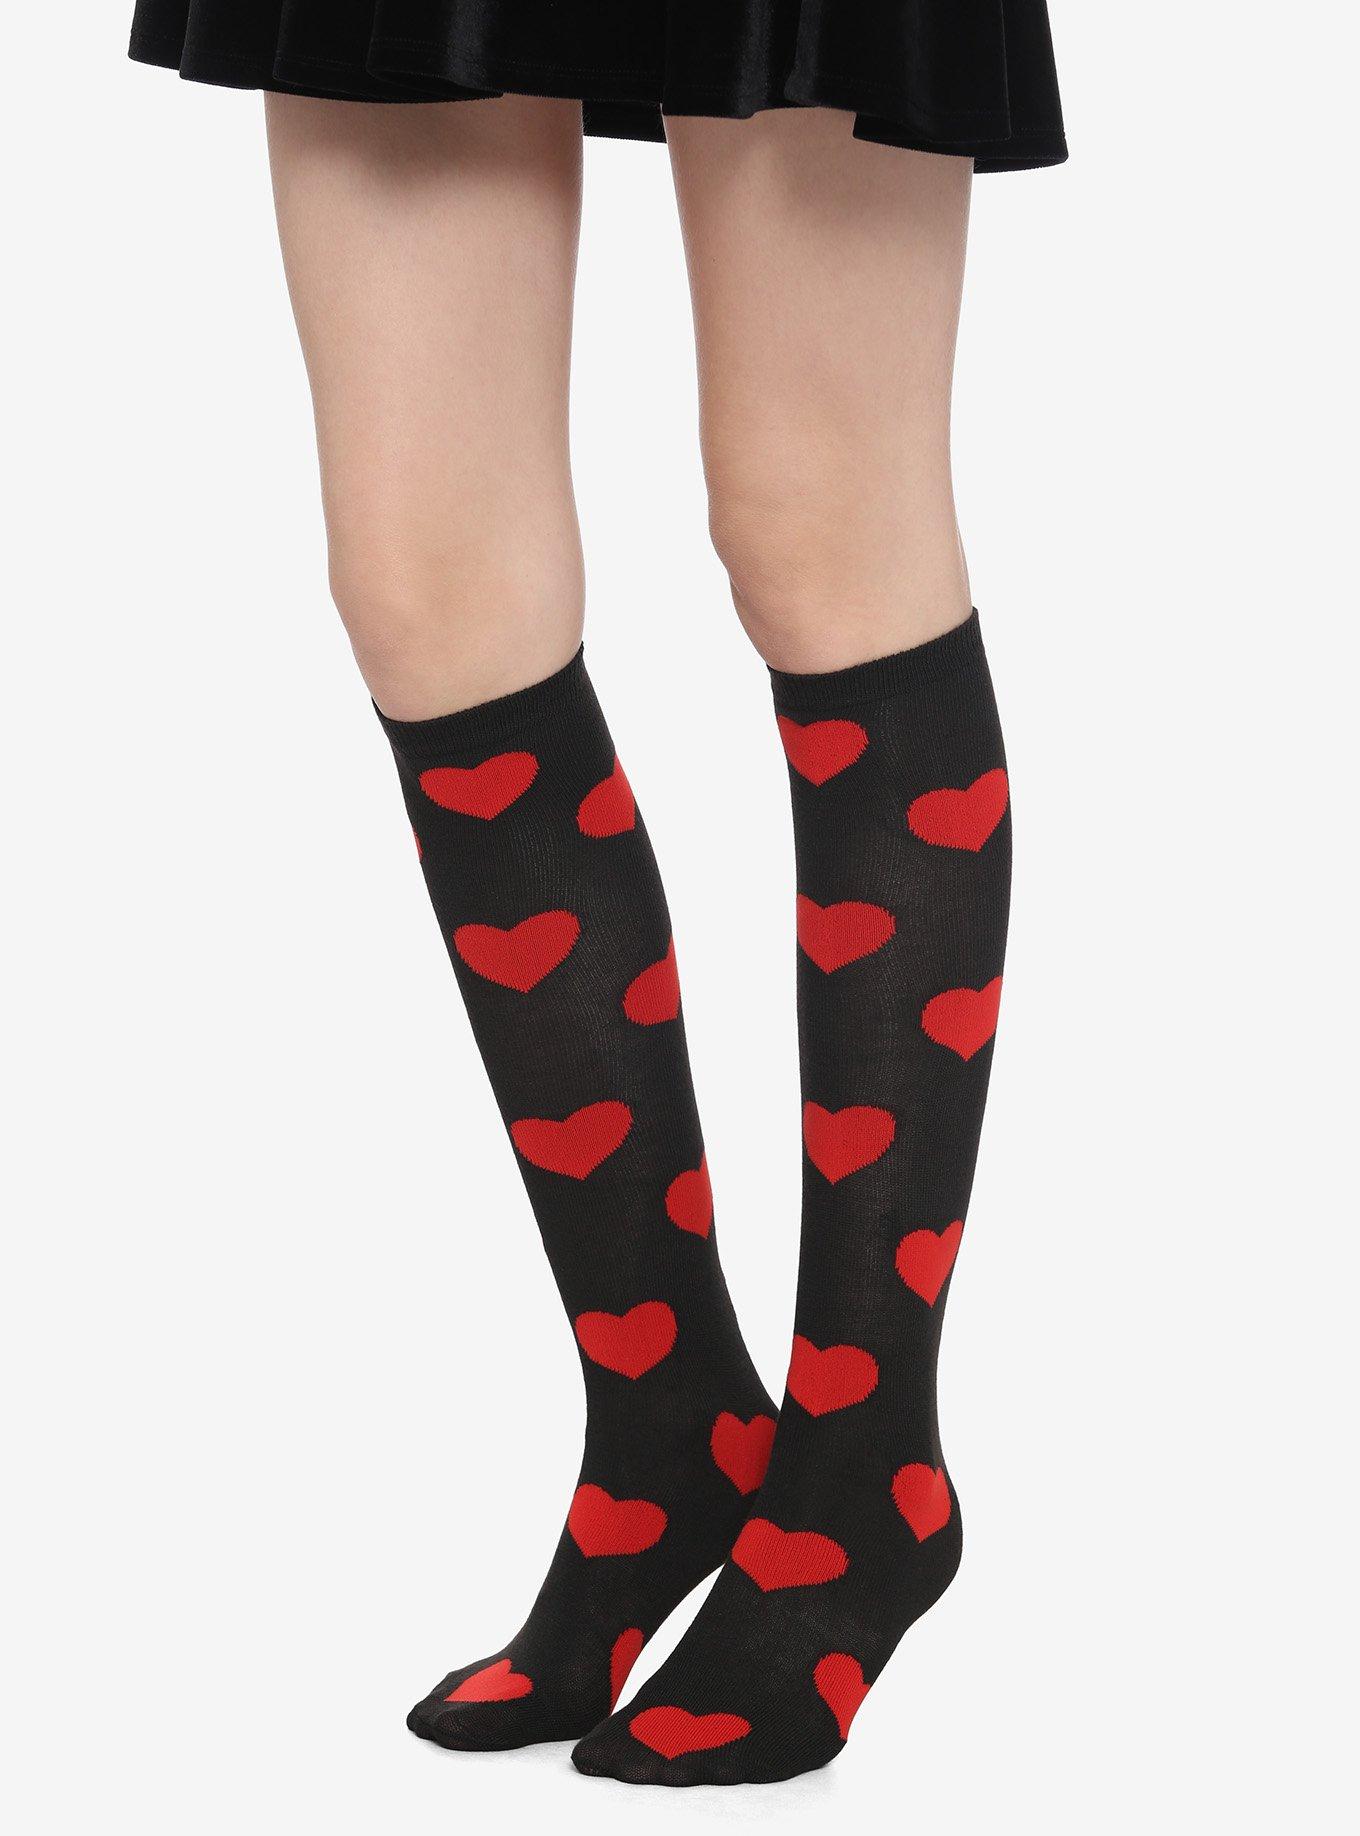 Black & Red Heart Knee-High Socks, , hi-res